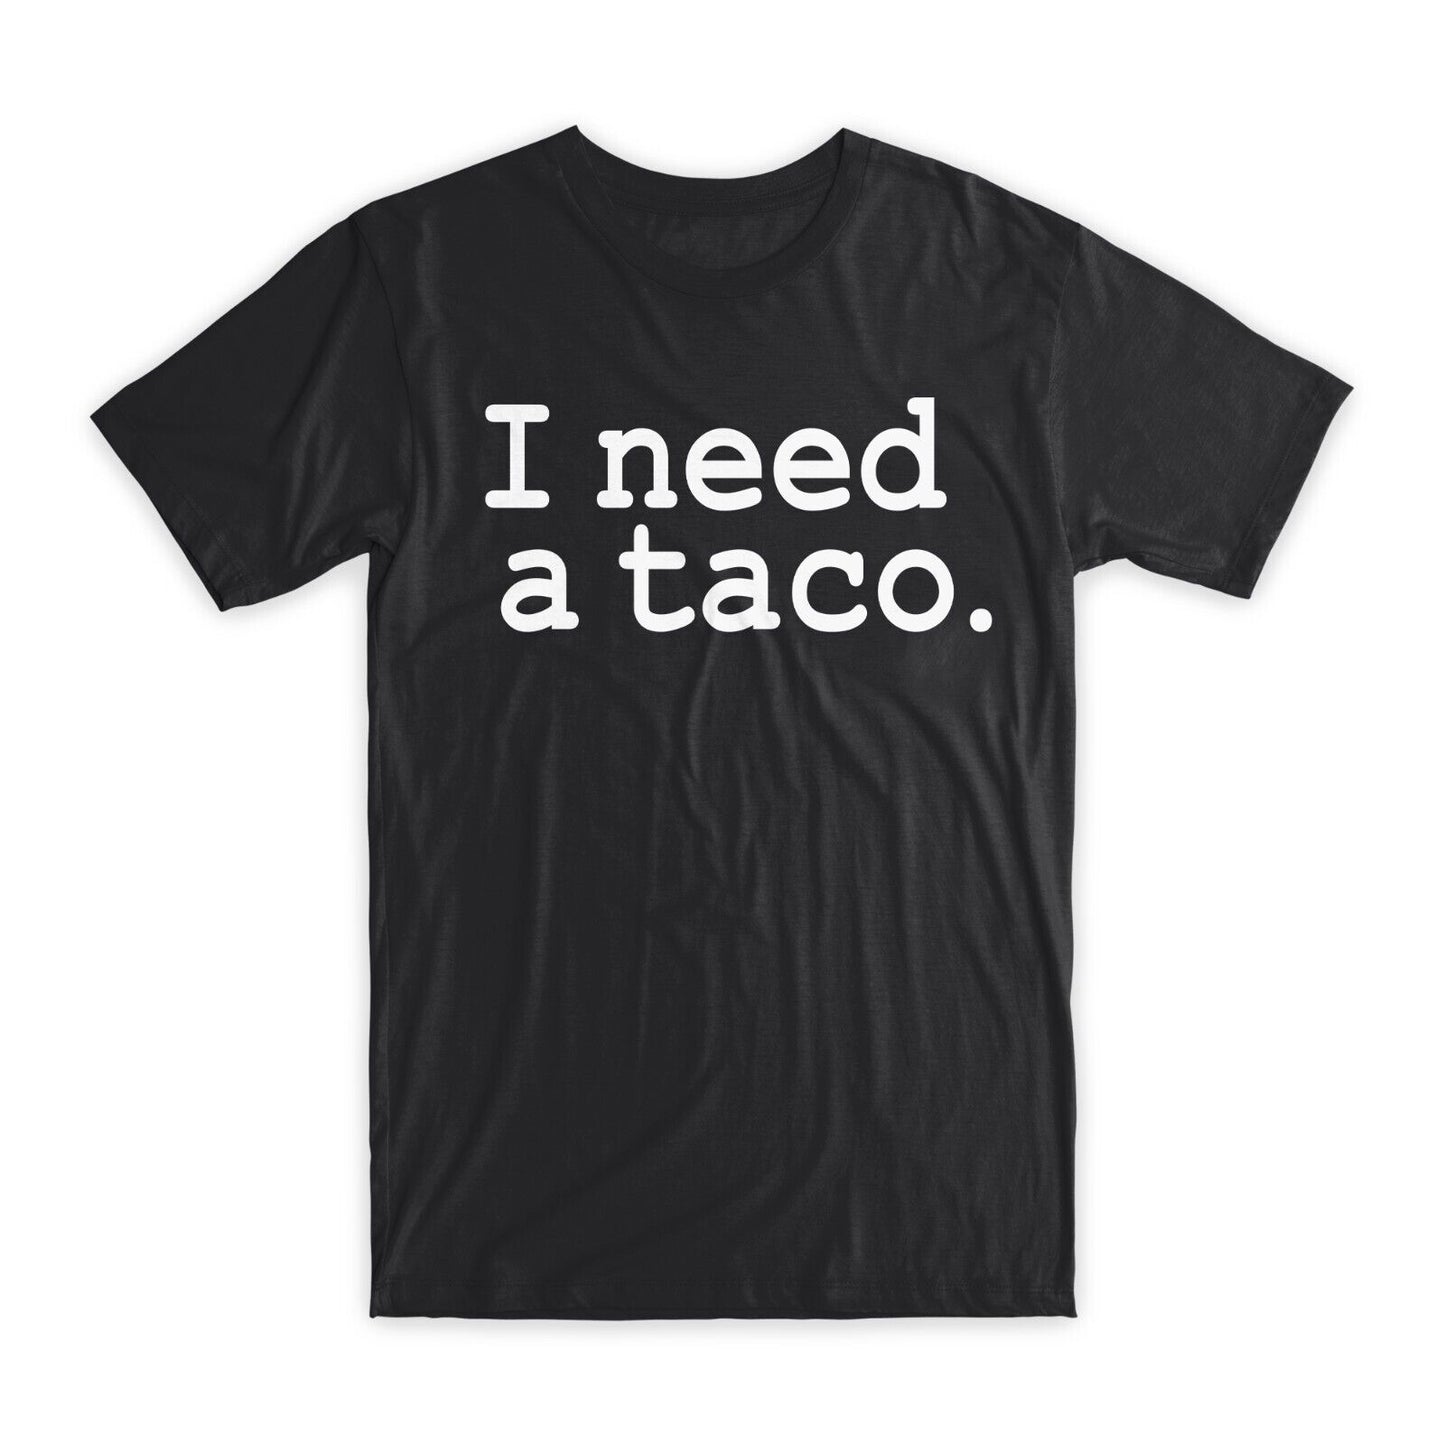 I Need A Taco T-Shirt Premium Soft Cotton Crew Neck Funny Tees Novelty Gift NEW